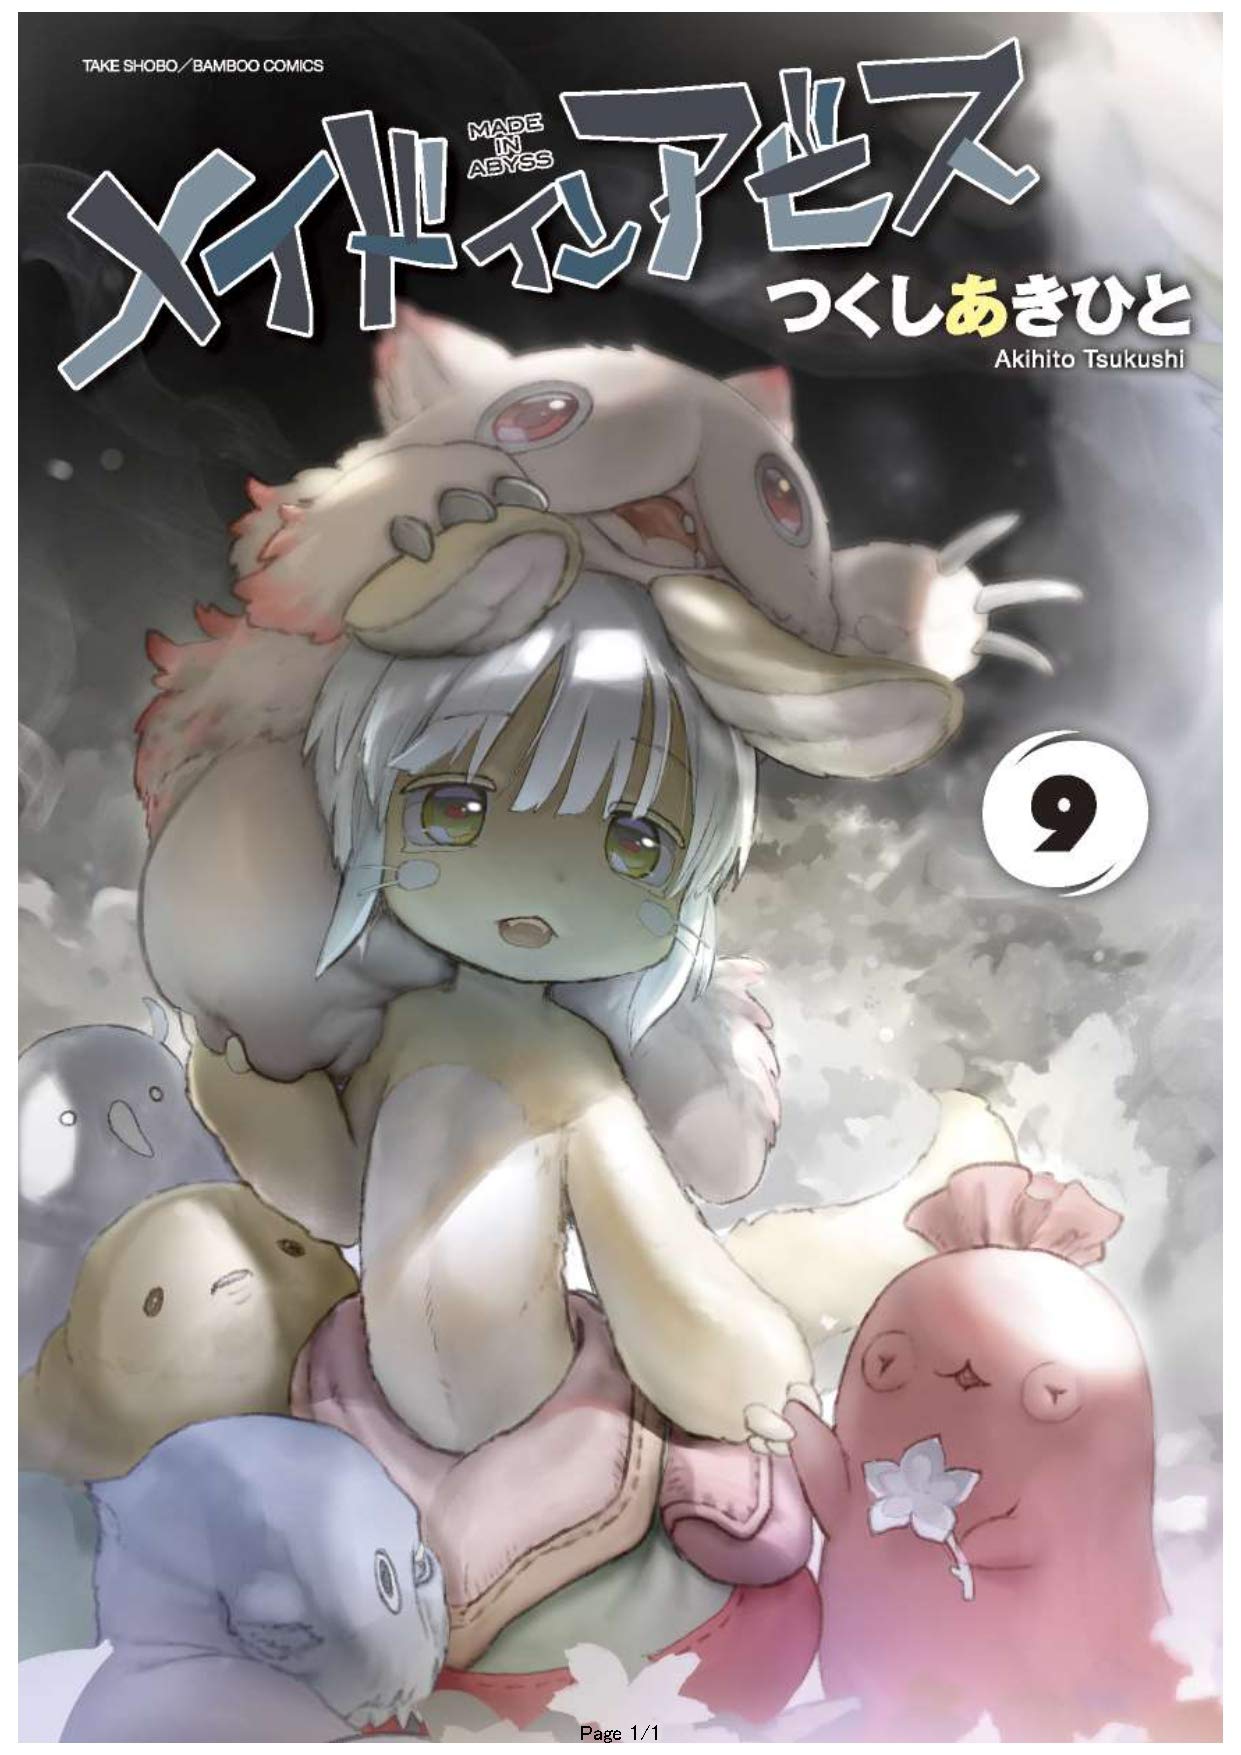 Kudasai on X: El manga escrito por LINK e ilustrado por Kotaro